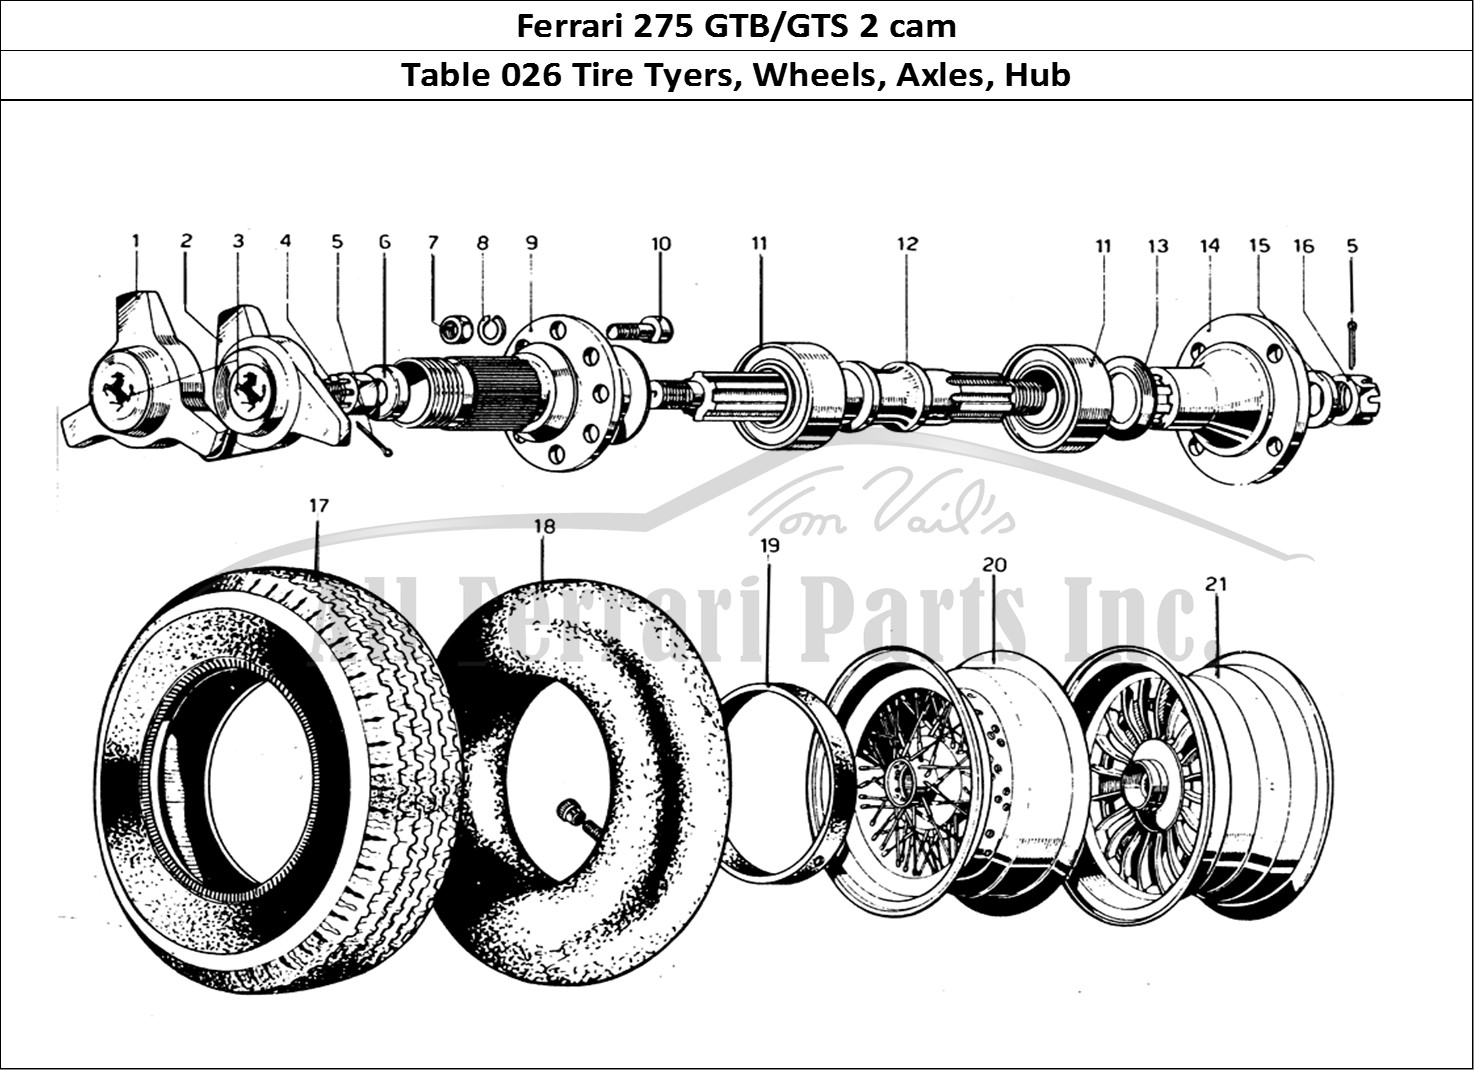 Ferrari Parts Ferrari 275 GTB/GTS 2 cam Page 026 Tyres - Wheels & Shaft